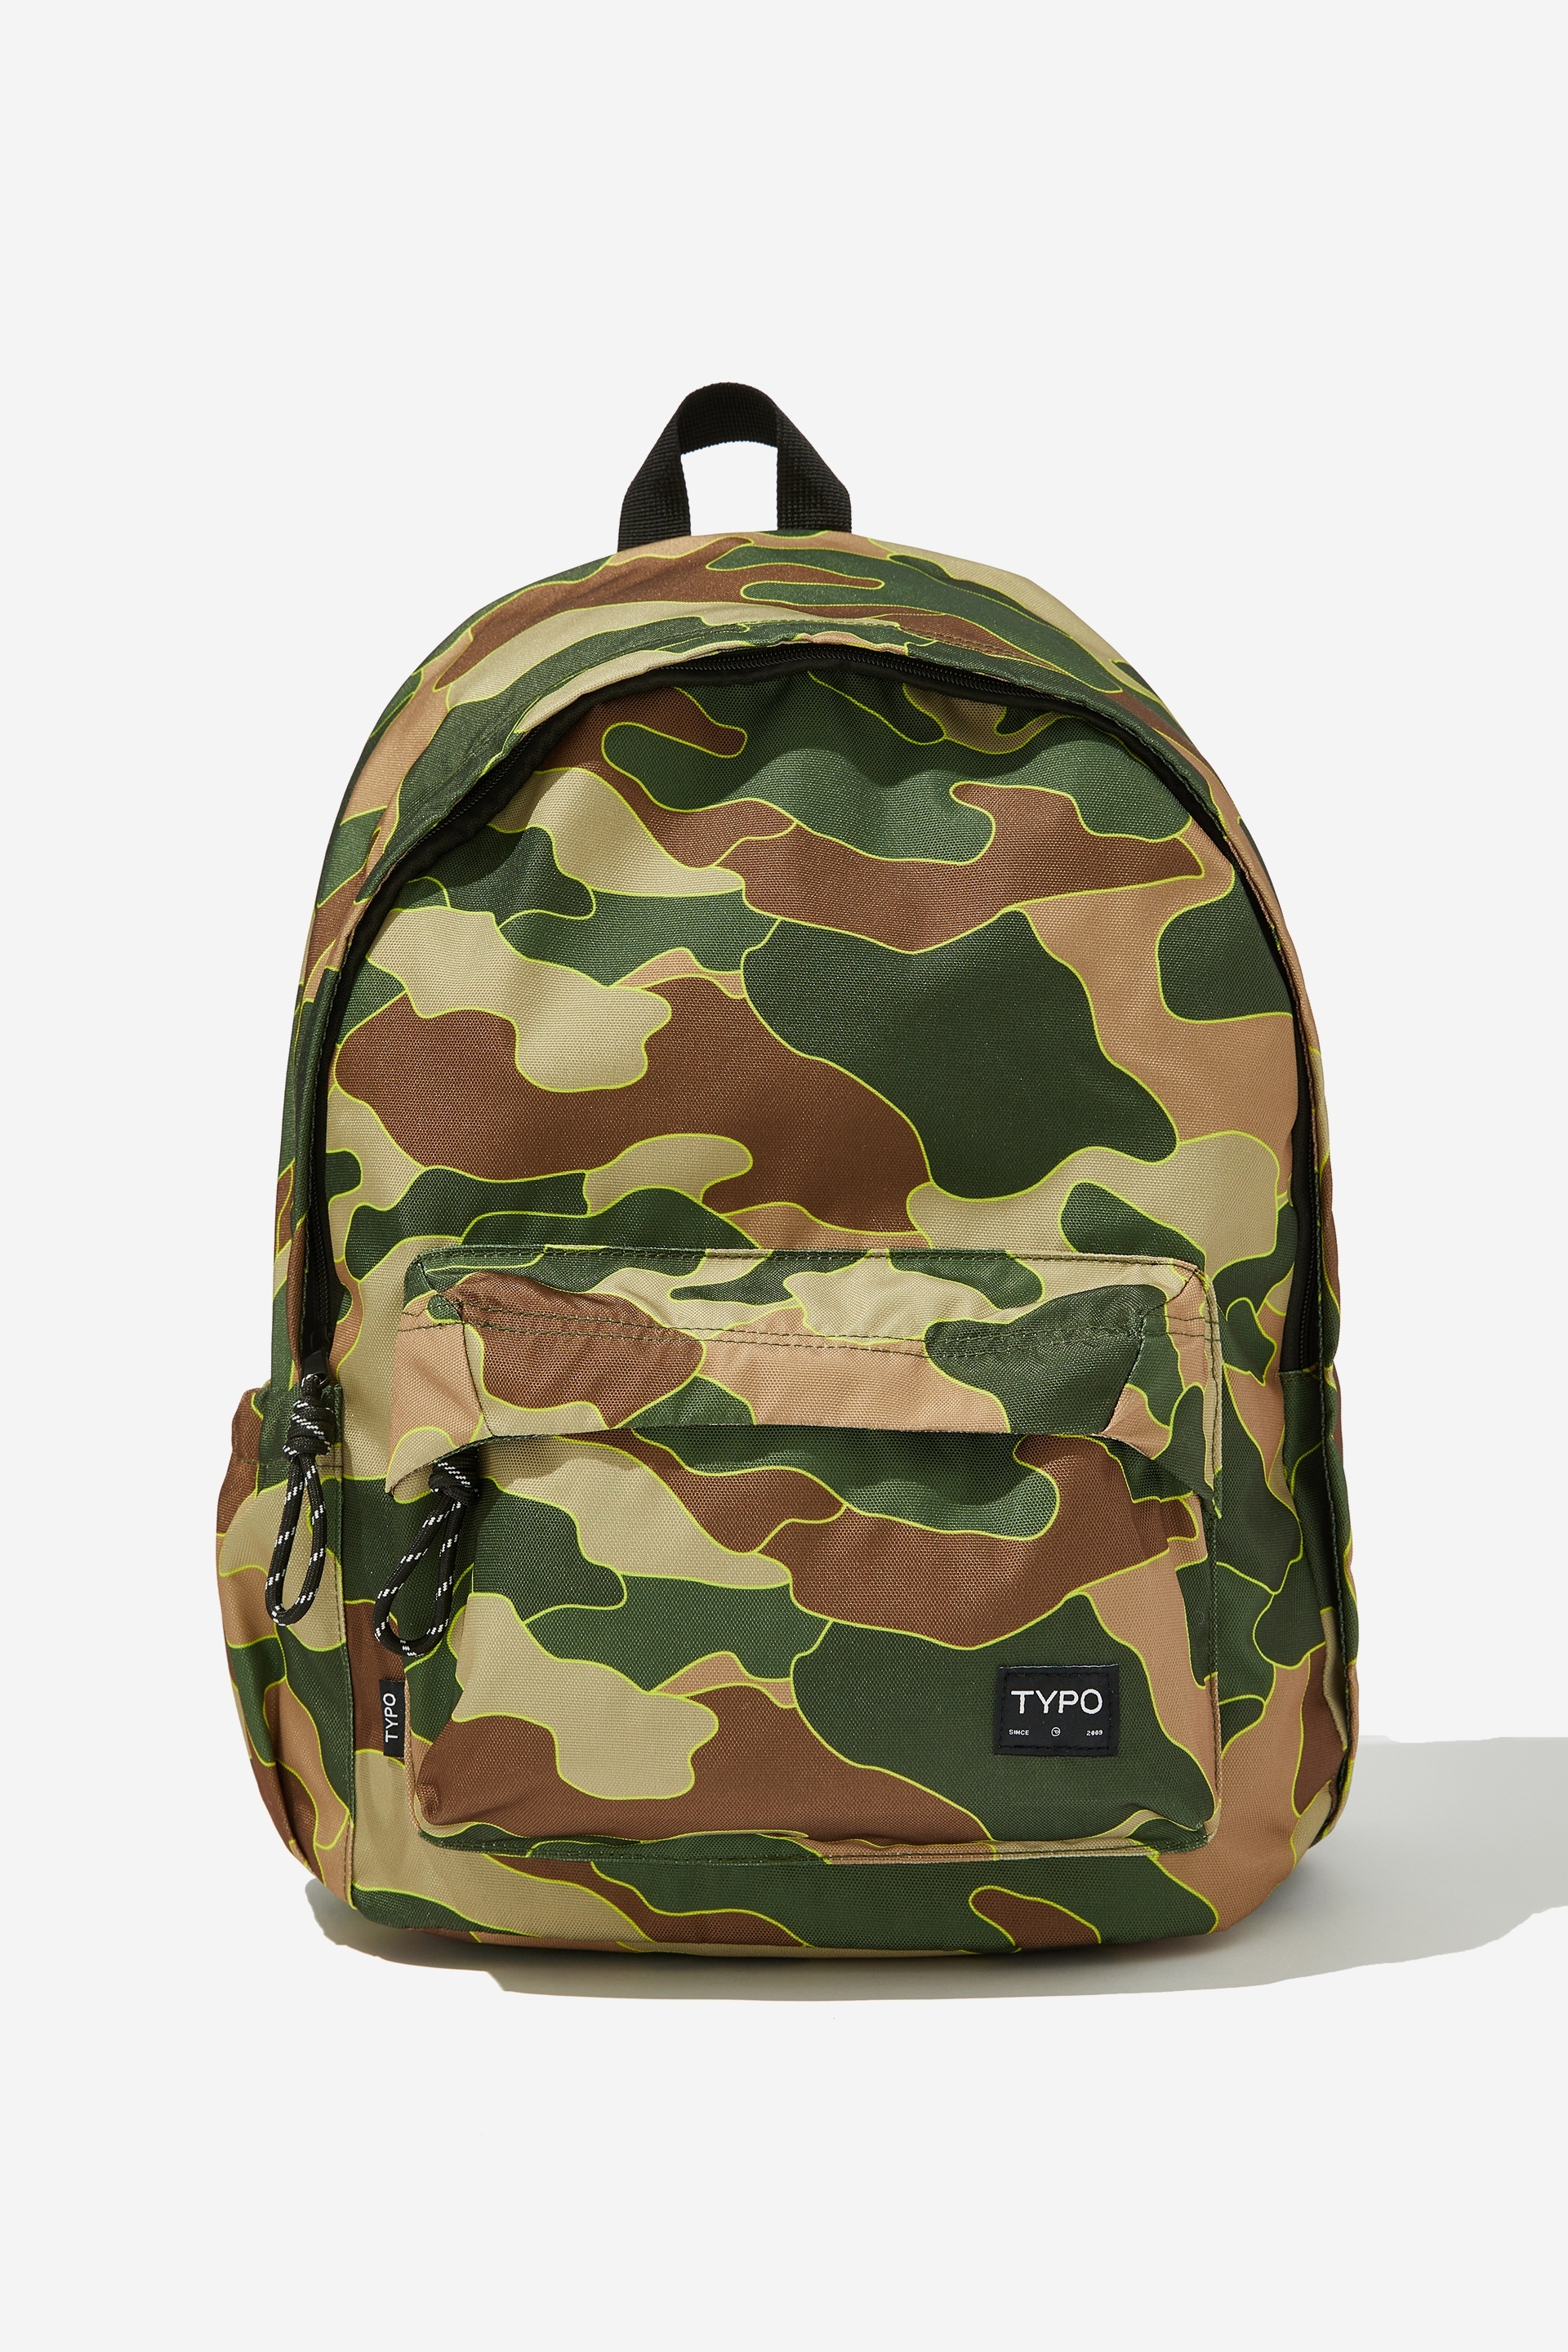 Typo - Urban Backpack - Camo keyline